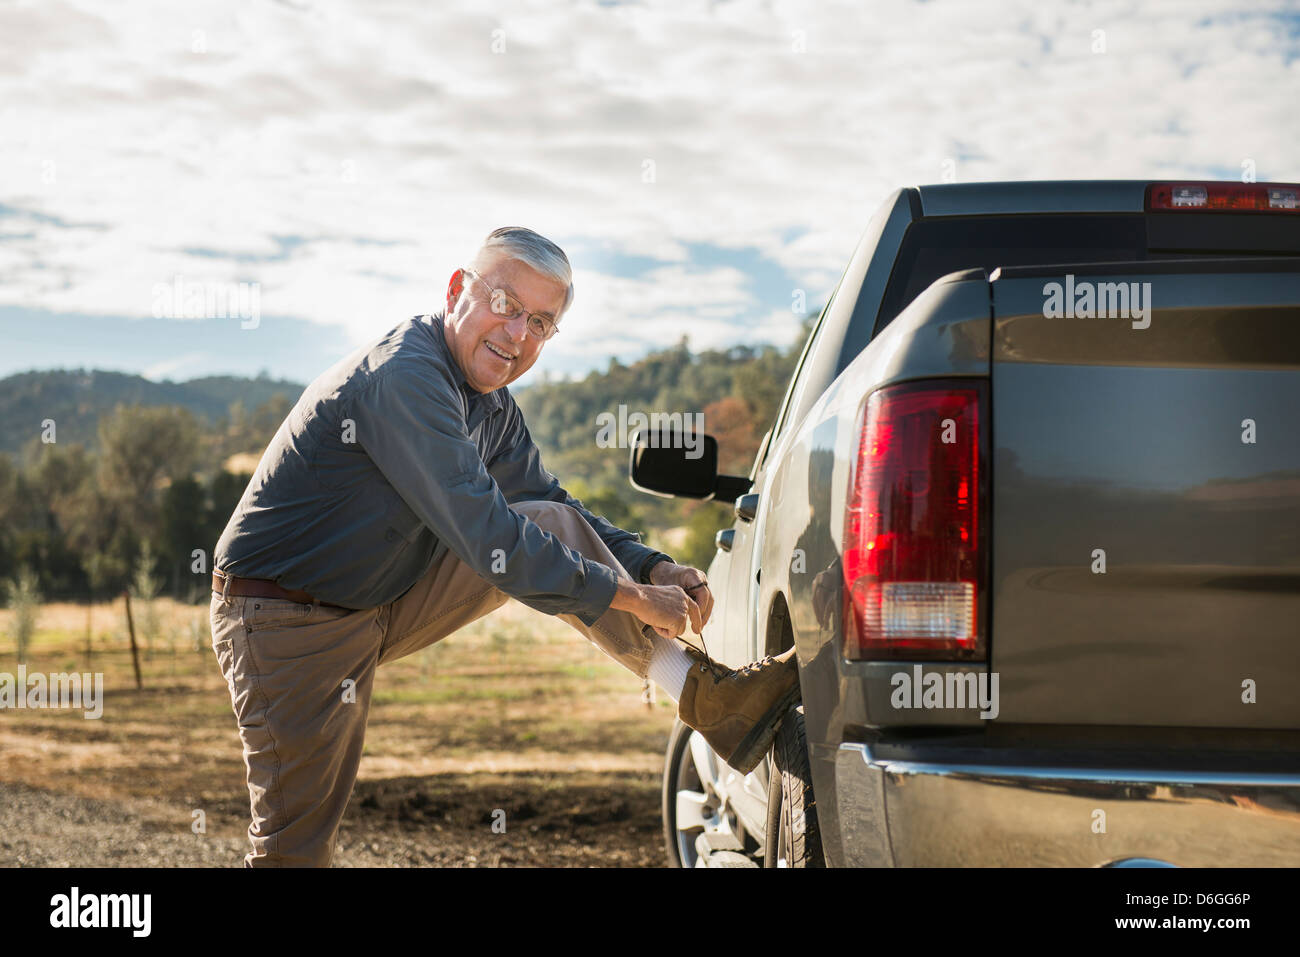 Older Caucasian man tying his shoe on truck wheel Stock Photo